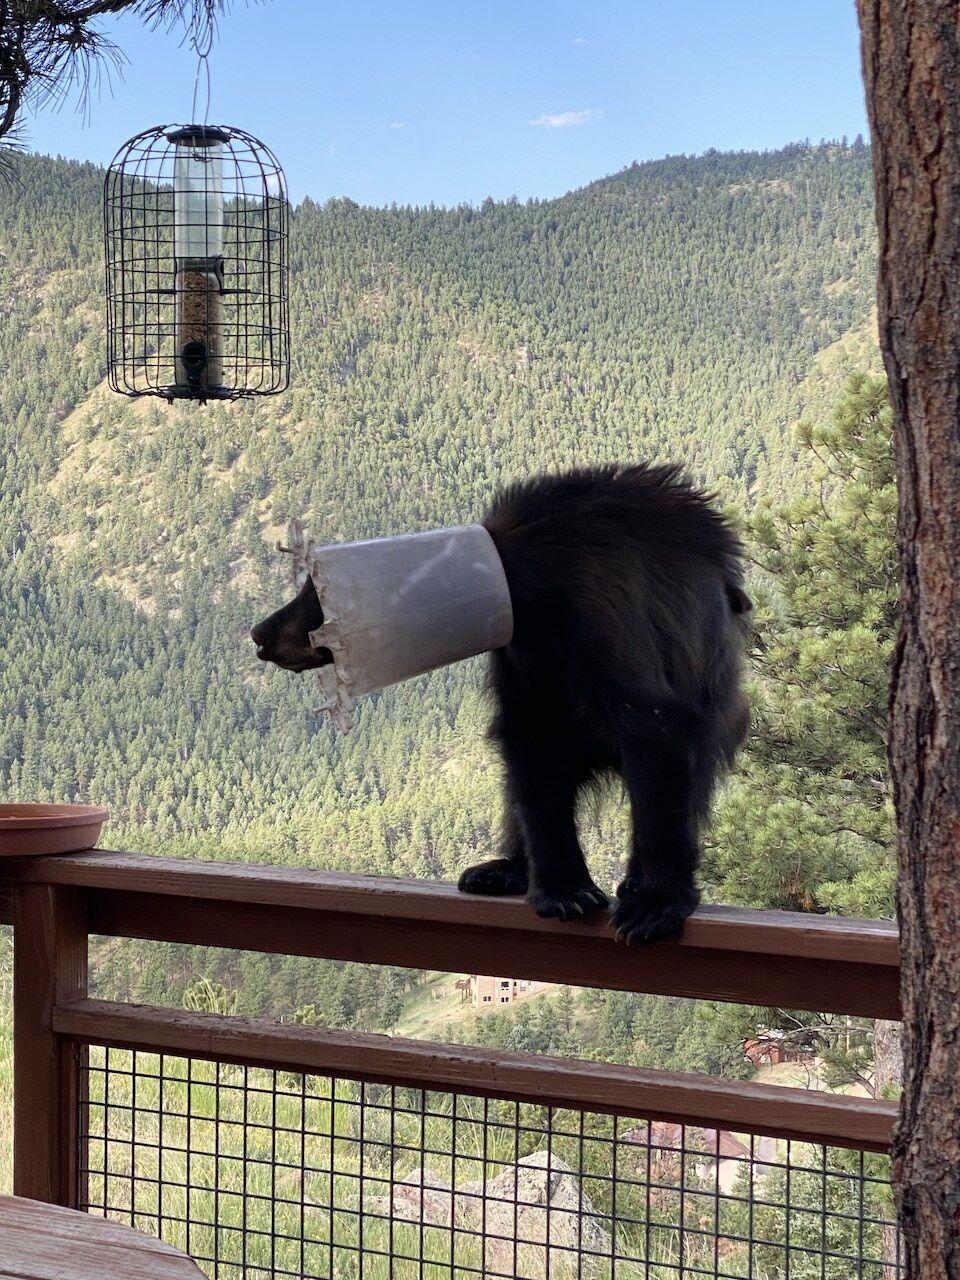 Bear with bucket on head